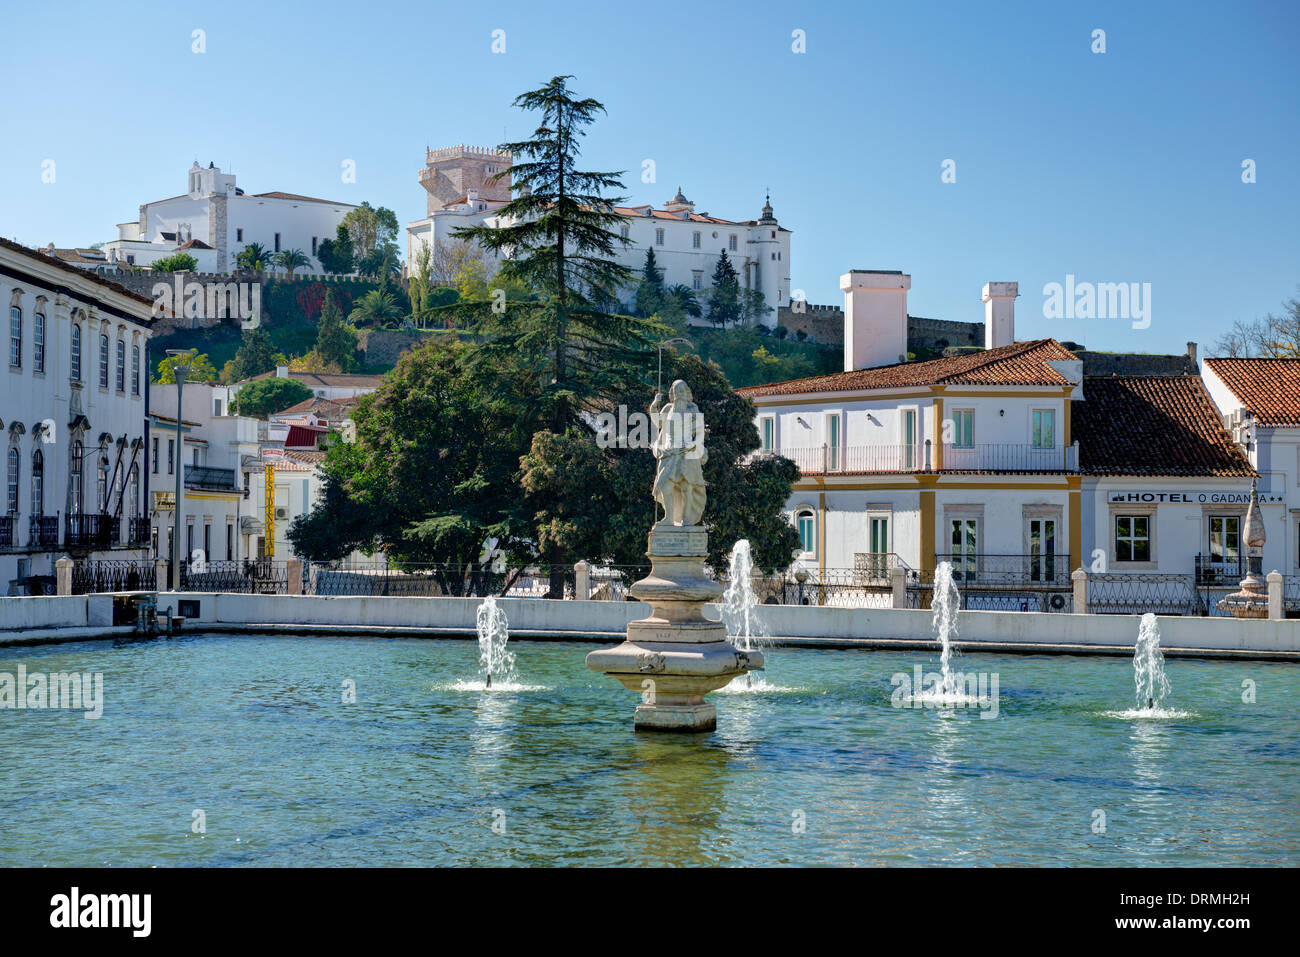 Portugal, the Alentejo, Estremoz, the Lago do Gadanha fountains with the statue of the grim reaper (a Gadanha) Stock Photo